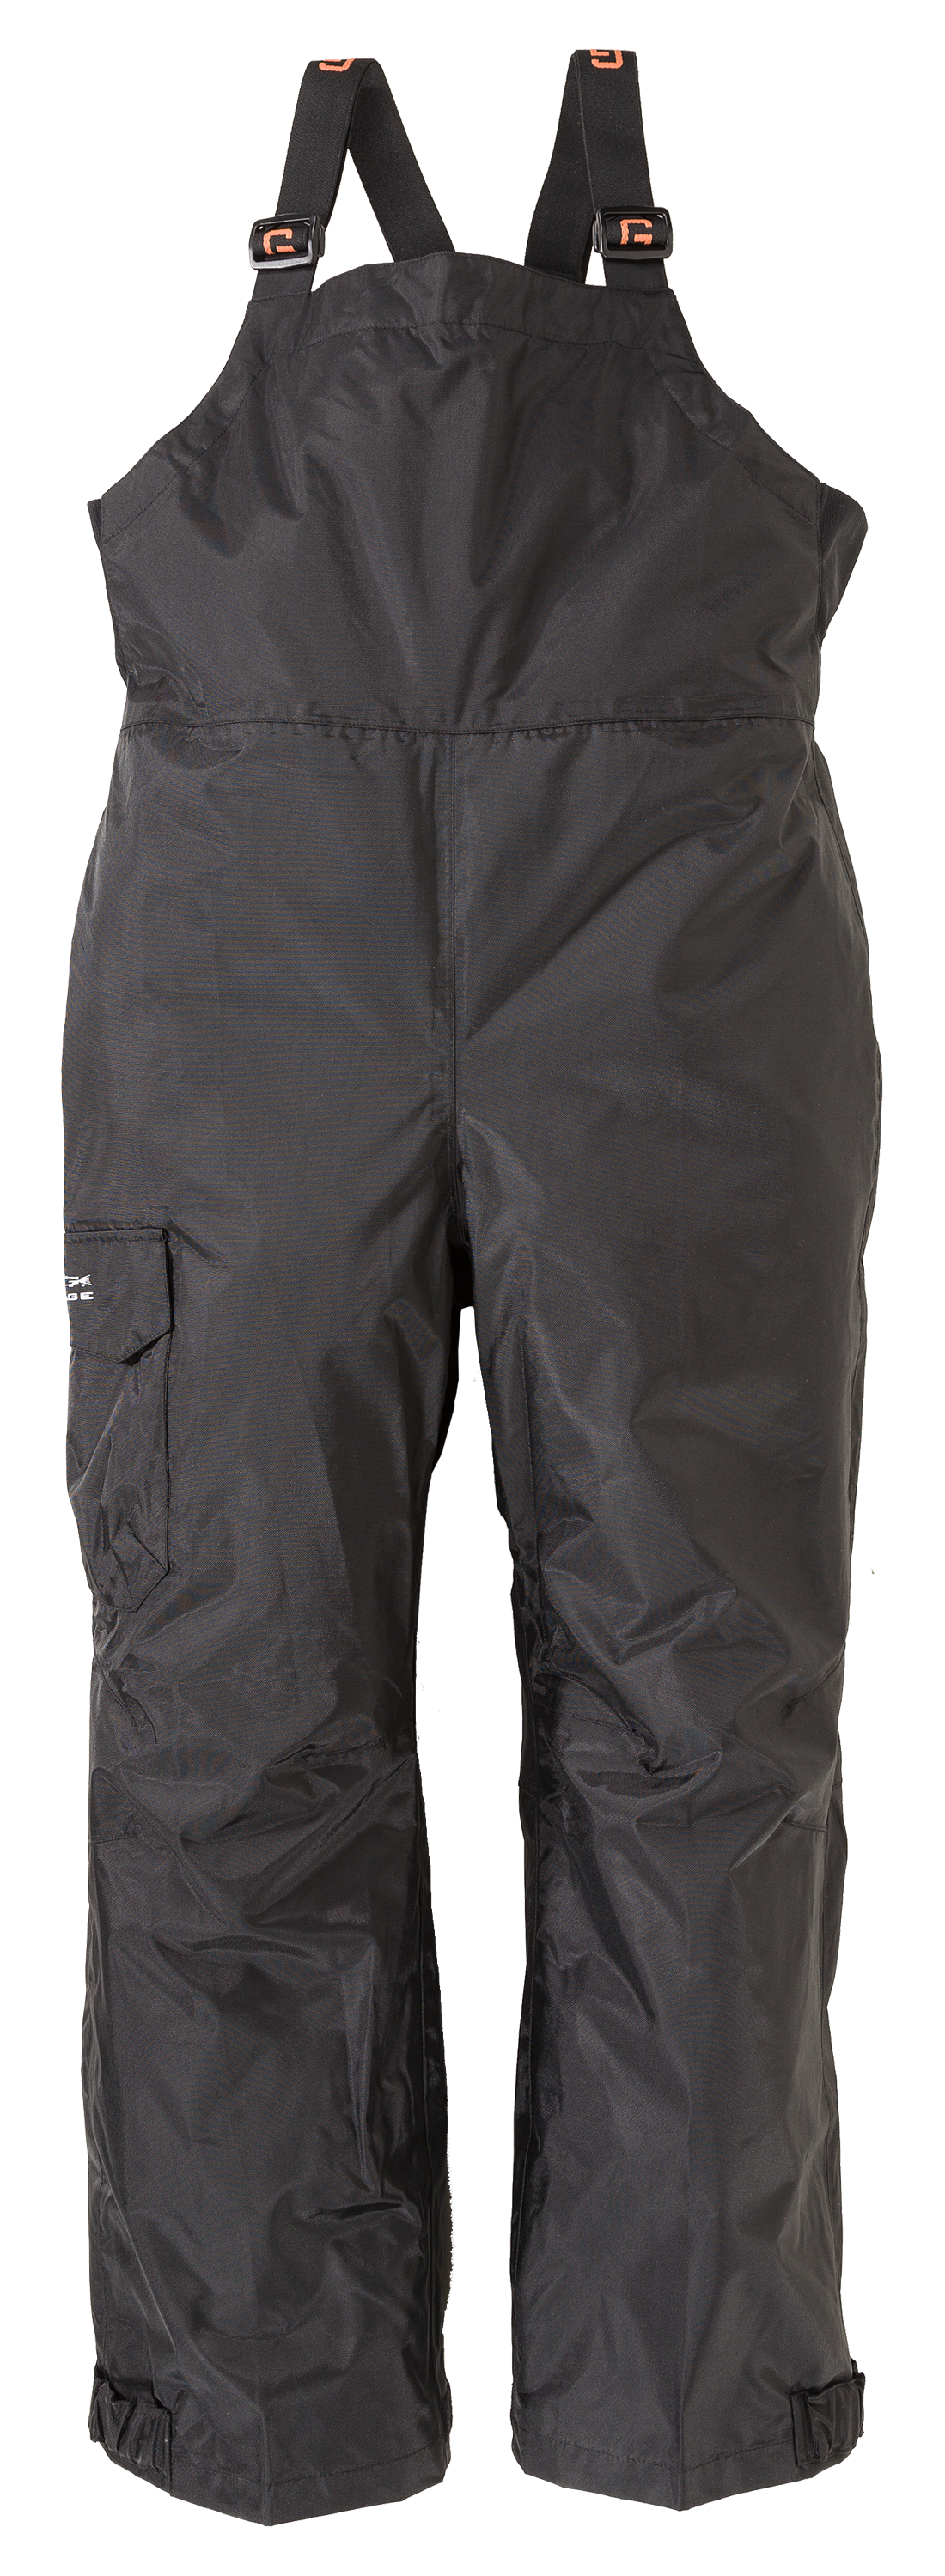 GRUNDENS WEATHER WATCH Rain Trouser Pants Fishing Black # 10020 $59.99 -  PicClick